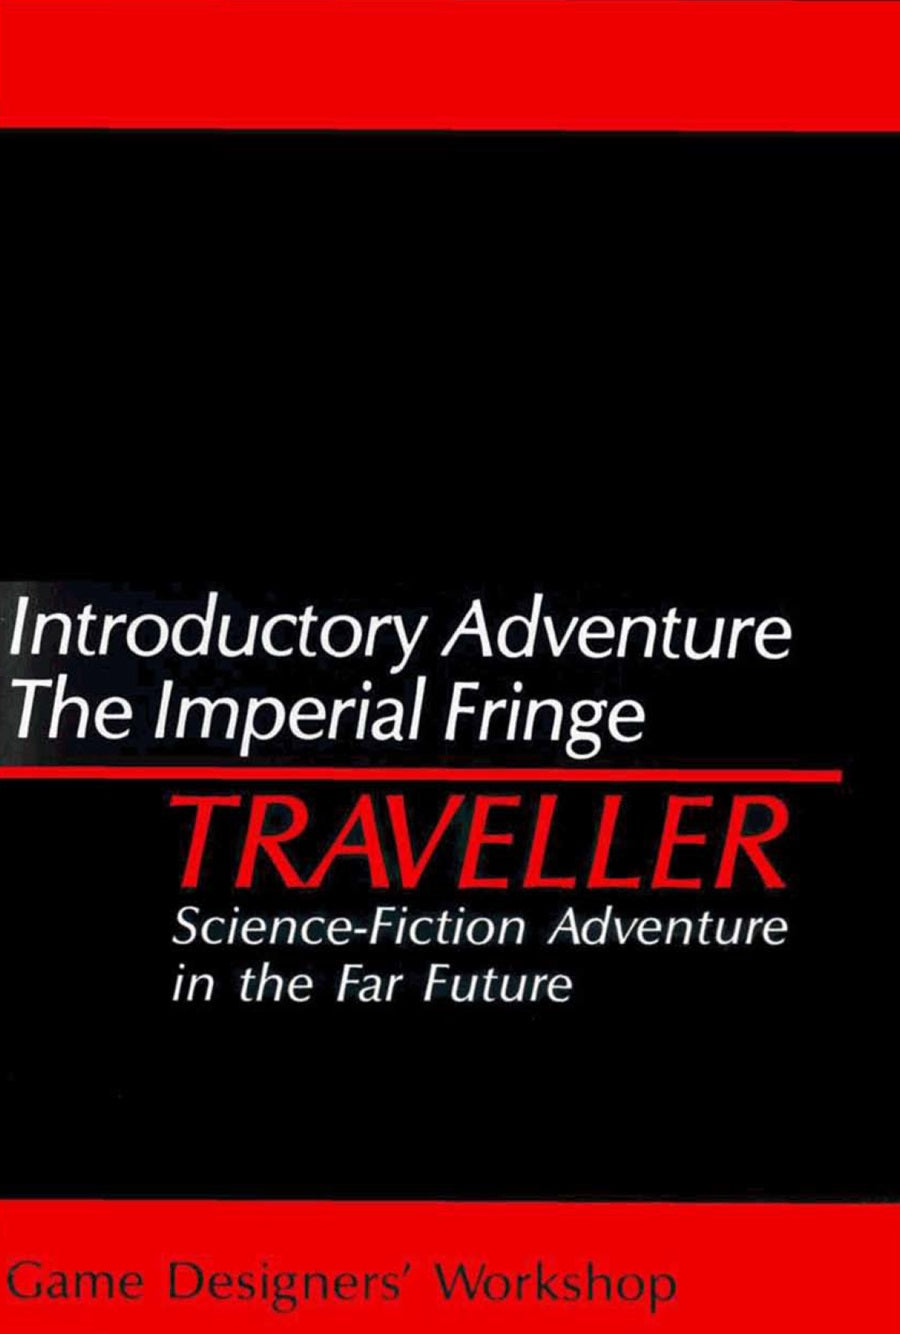 Adventure 0: The Imperial Fringe ebook